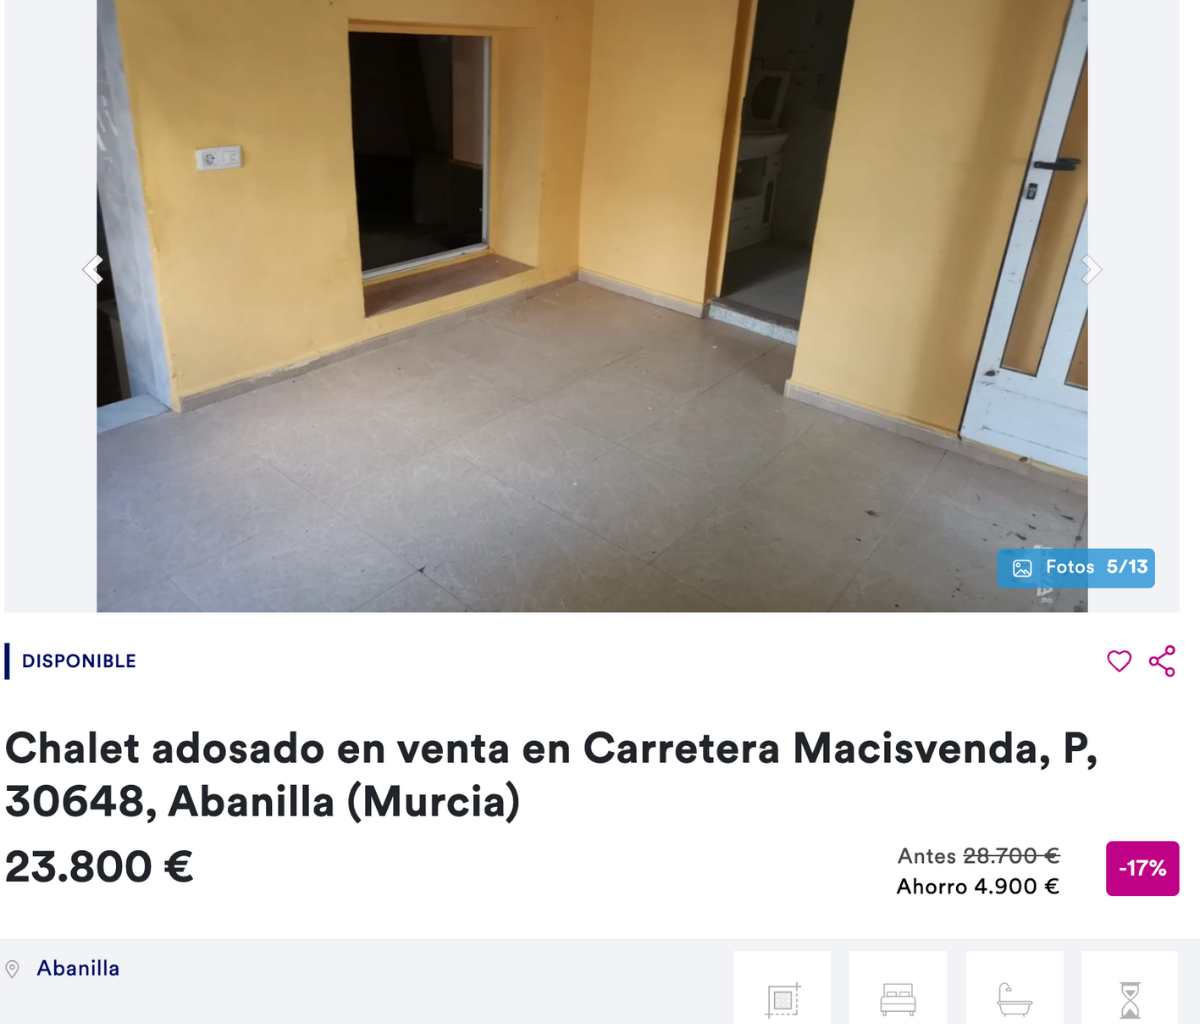 Chalet en venta en Abanilla (Murcia) por un precio de 23.800 euros